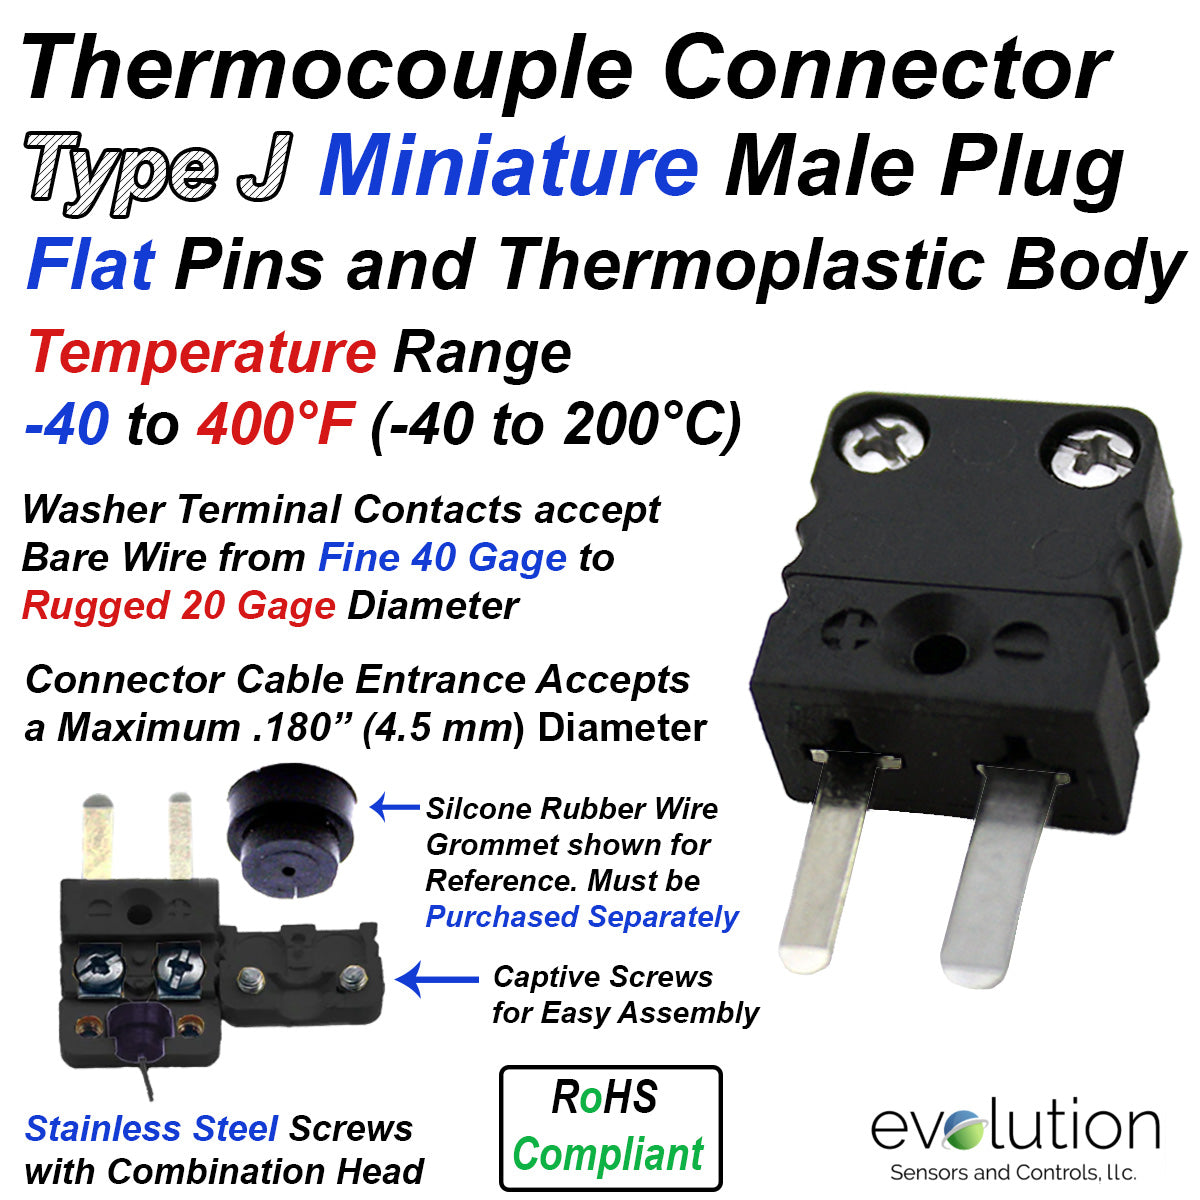 Type J Miniature Male Thermocouple Connector | Evolution Sensors